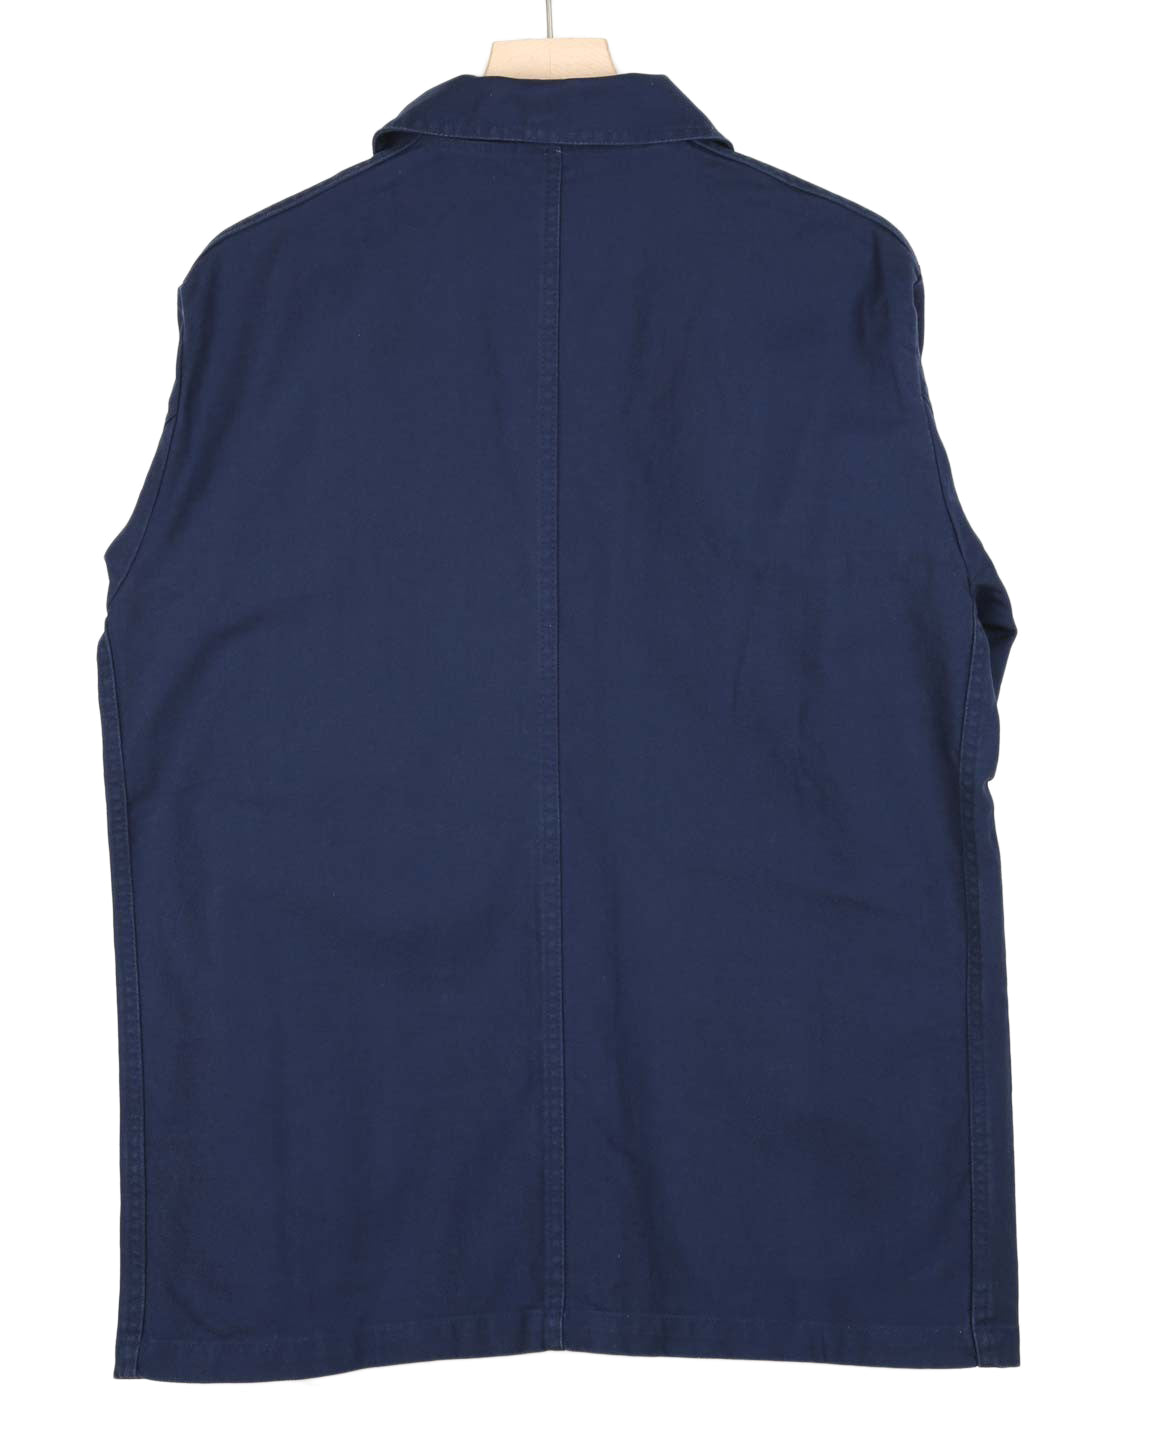 Workwear Jacket 5C in Twill Fabric - Navy